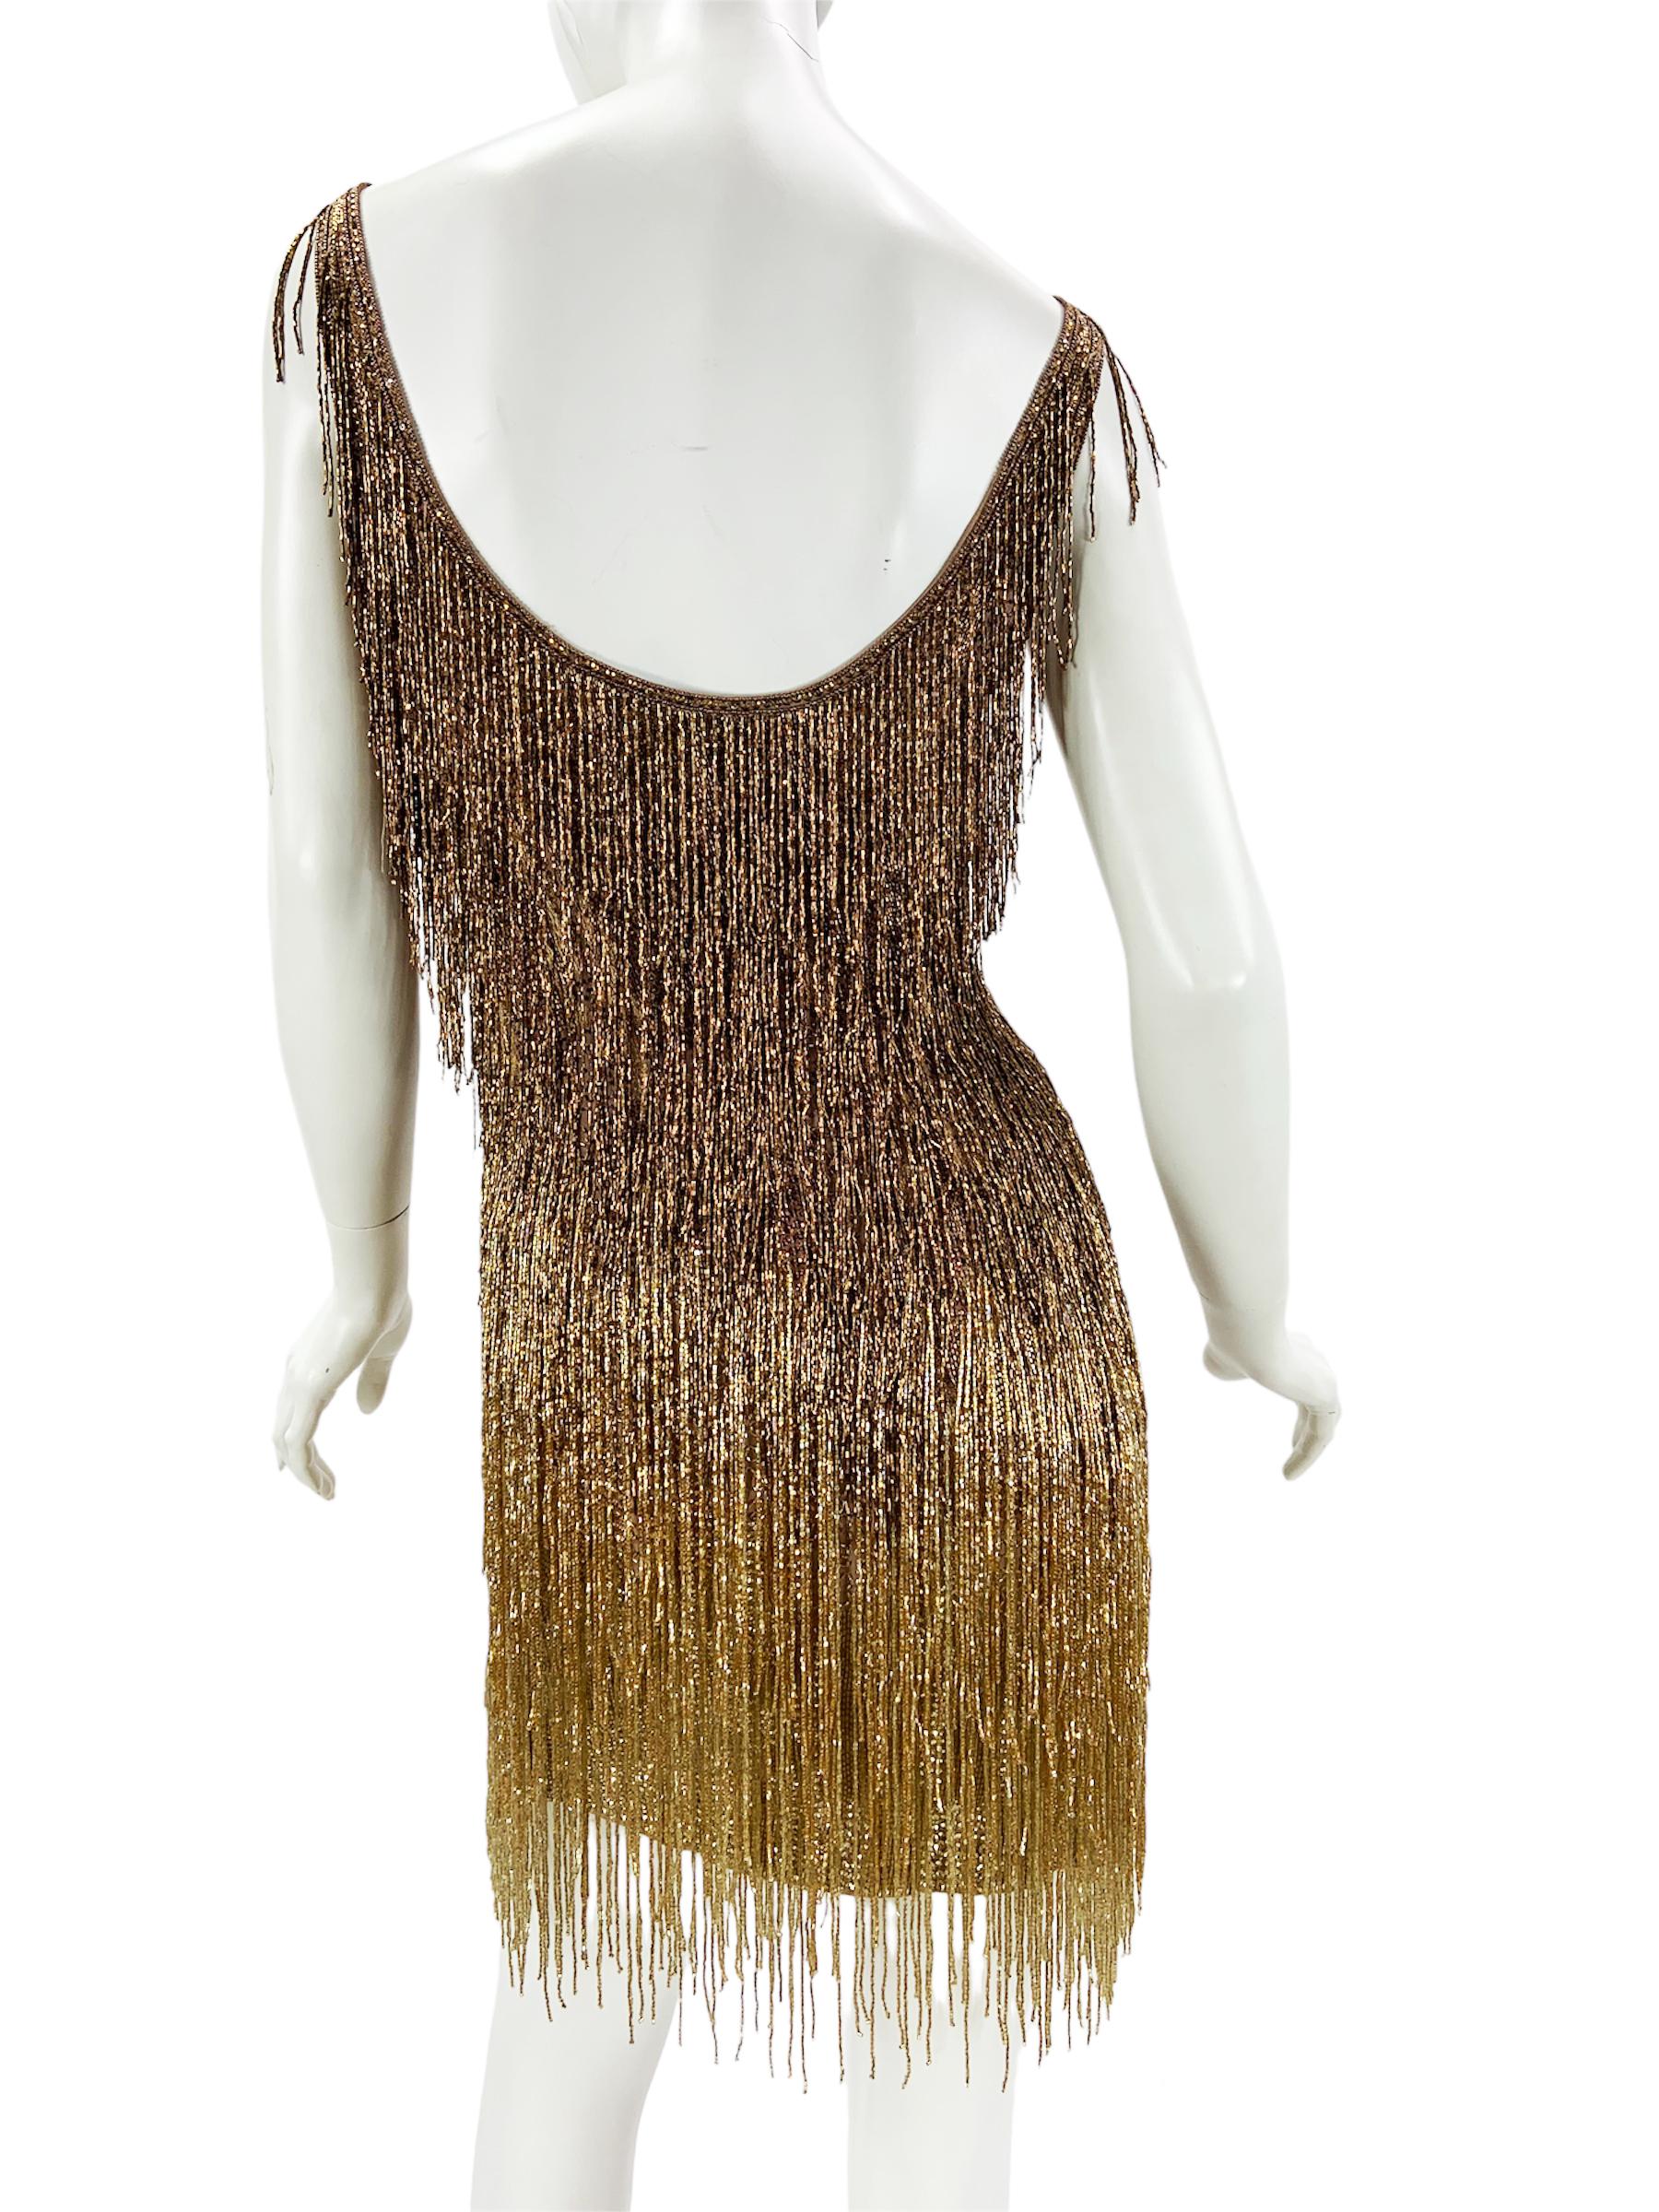 Iconic MUSEUM Roberto Cavalli Fringe Beaded Dress as seen on TAYLOR SWIFT It. 40 3